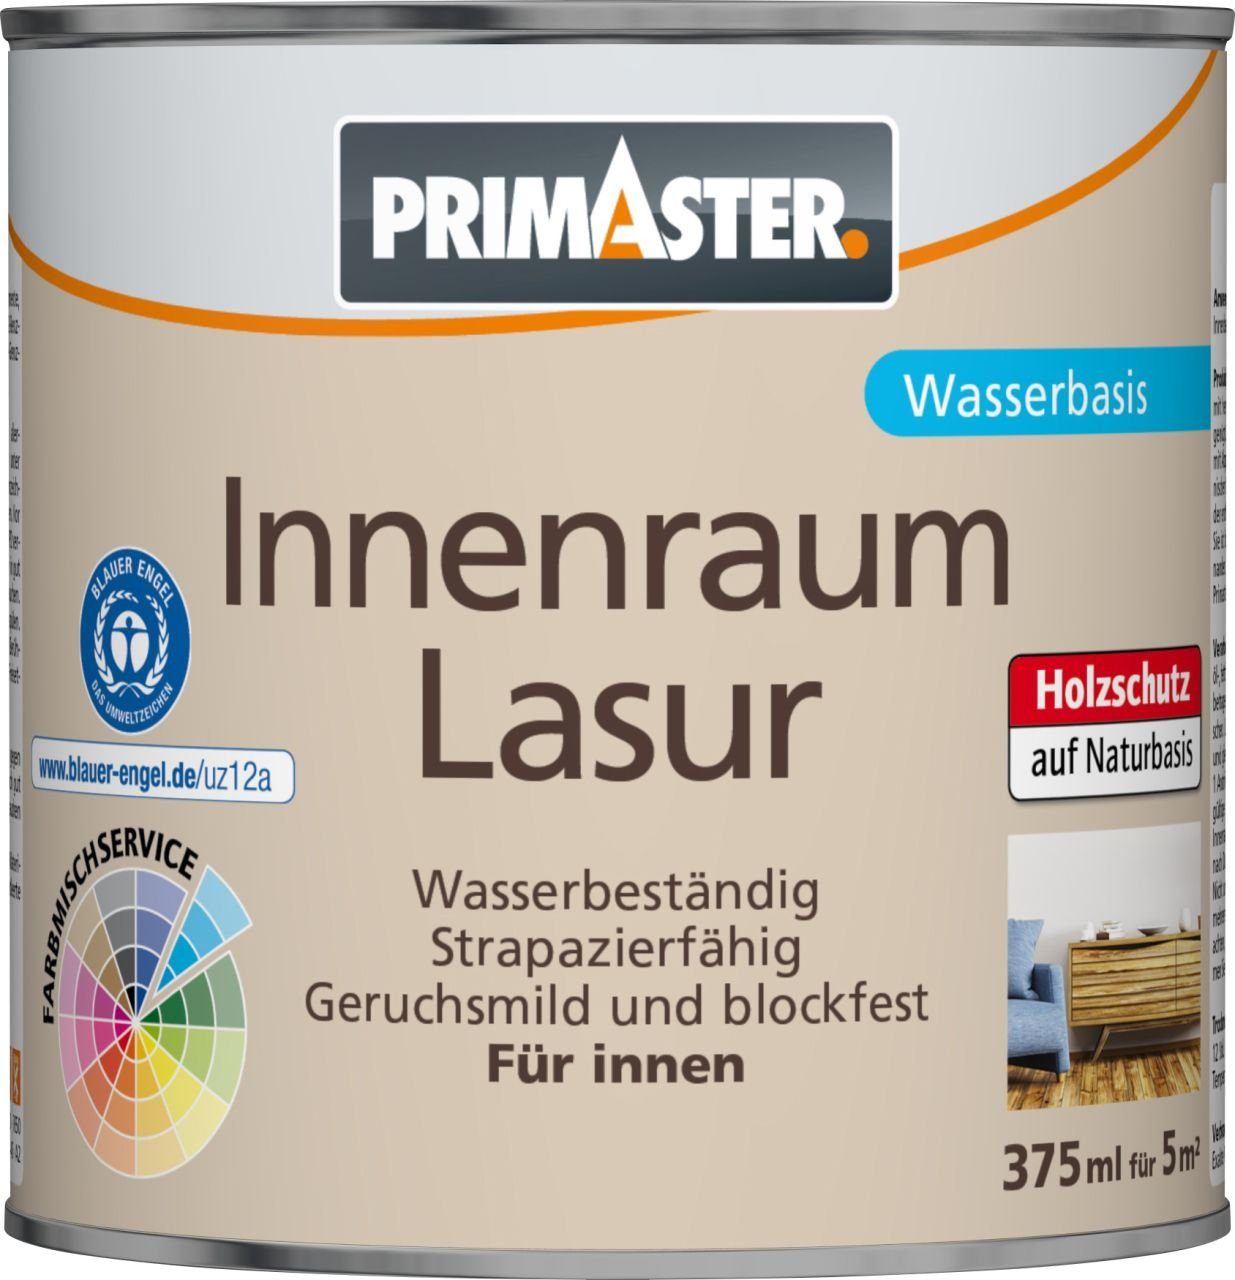 Primaster Lasur 375 farblos ml Innenraumlasur Primaster